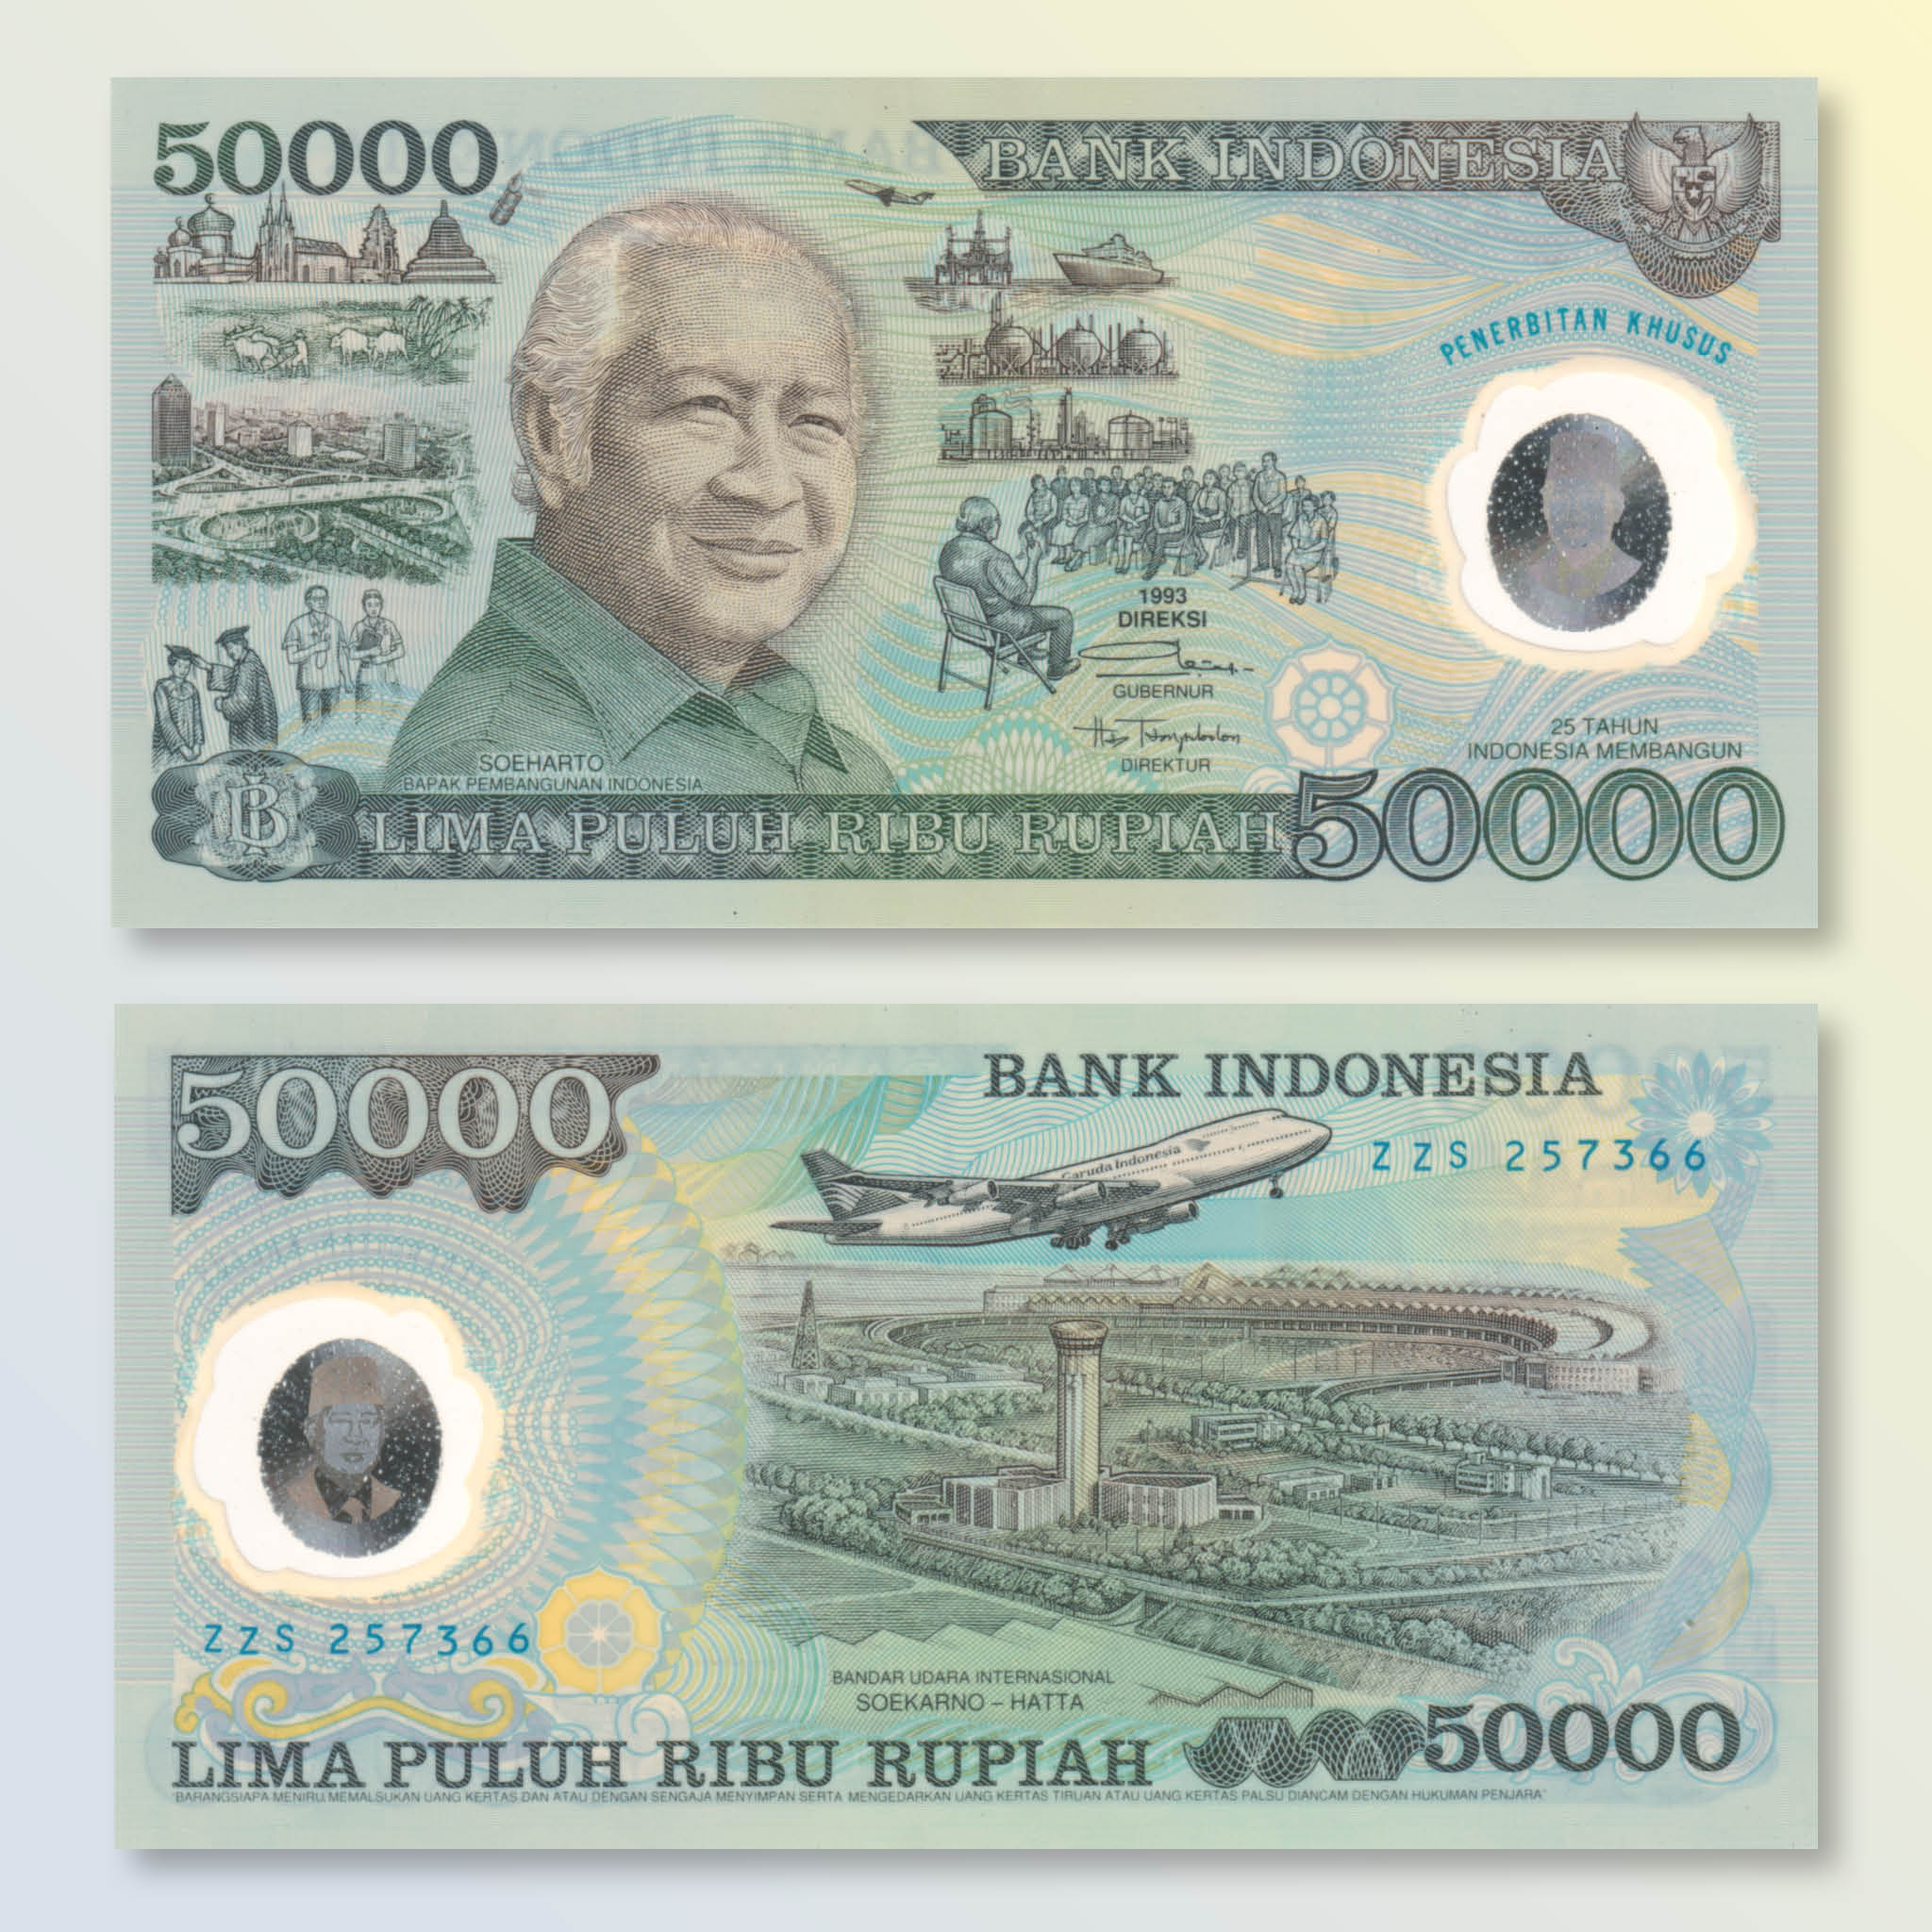 Indonesia 50000 Rupiah, 1993, B591a, P134a, UNC - Robert's World Money - World Banknotes